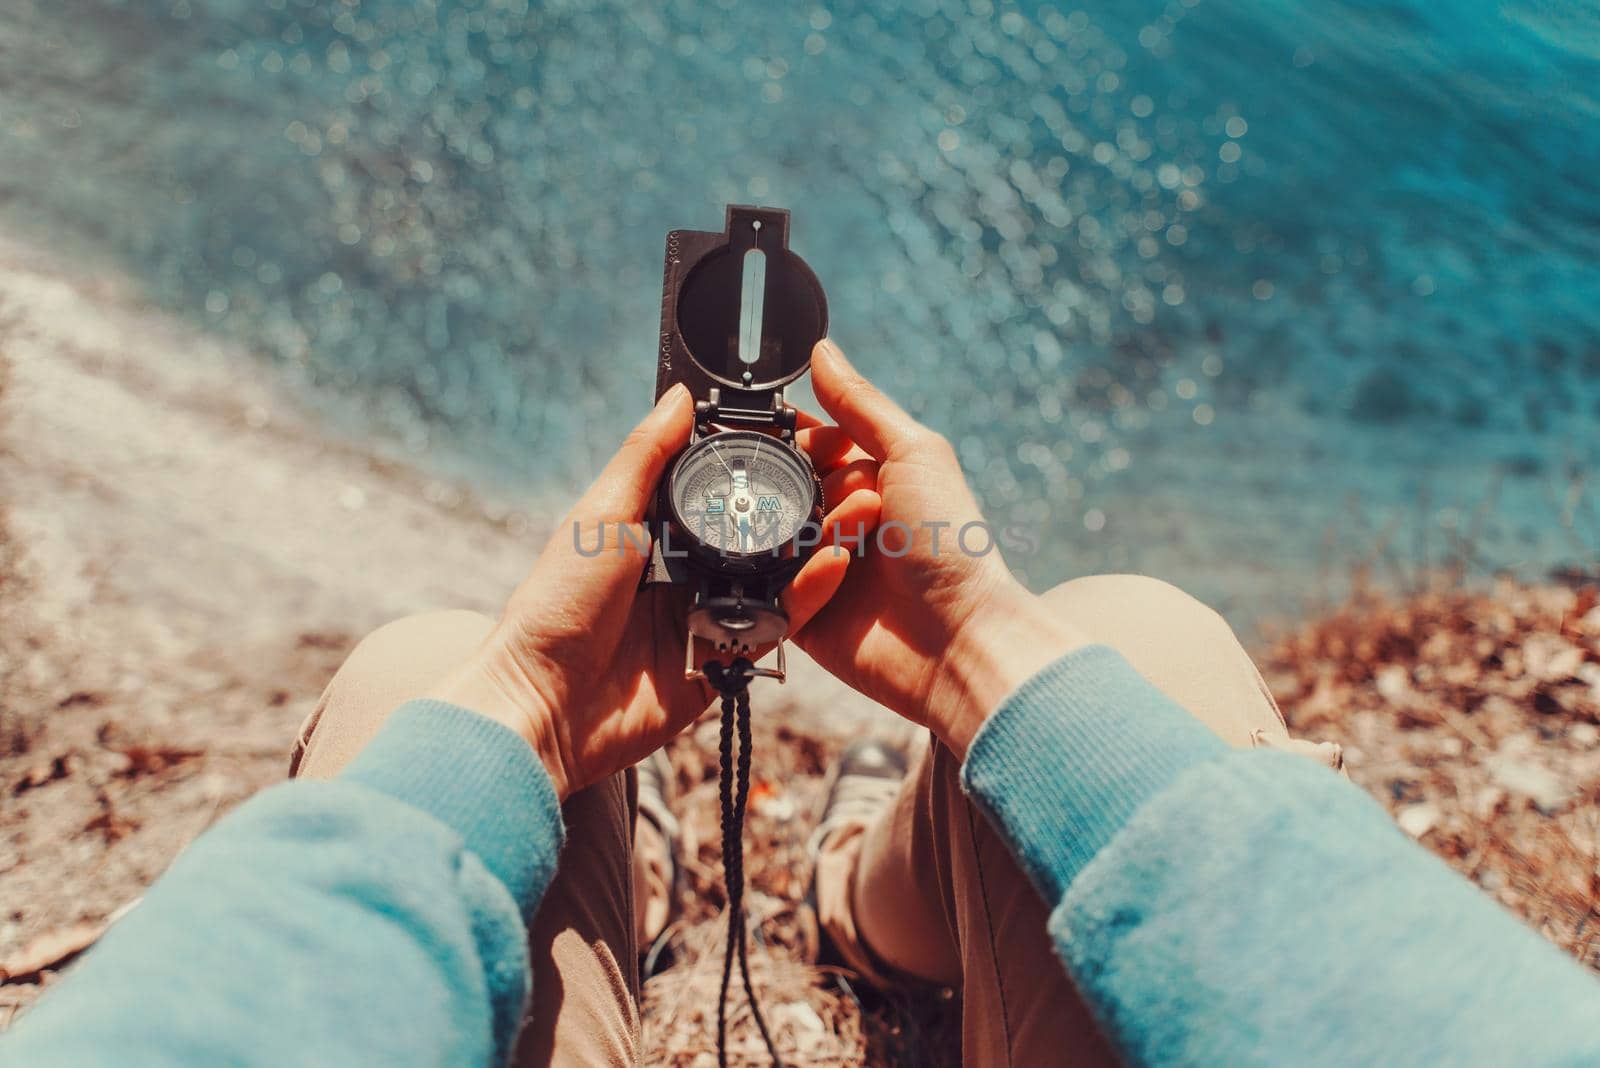 Traveler holding a compass on coastline by alexAleksei